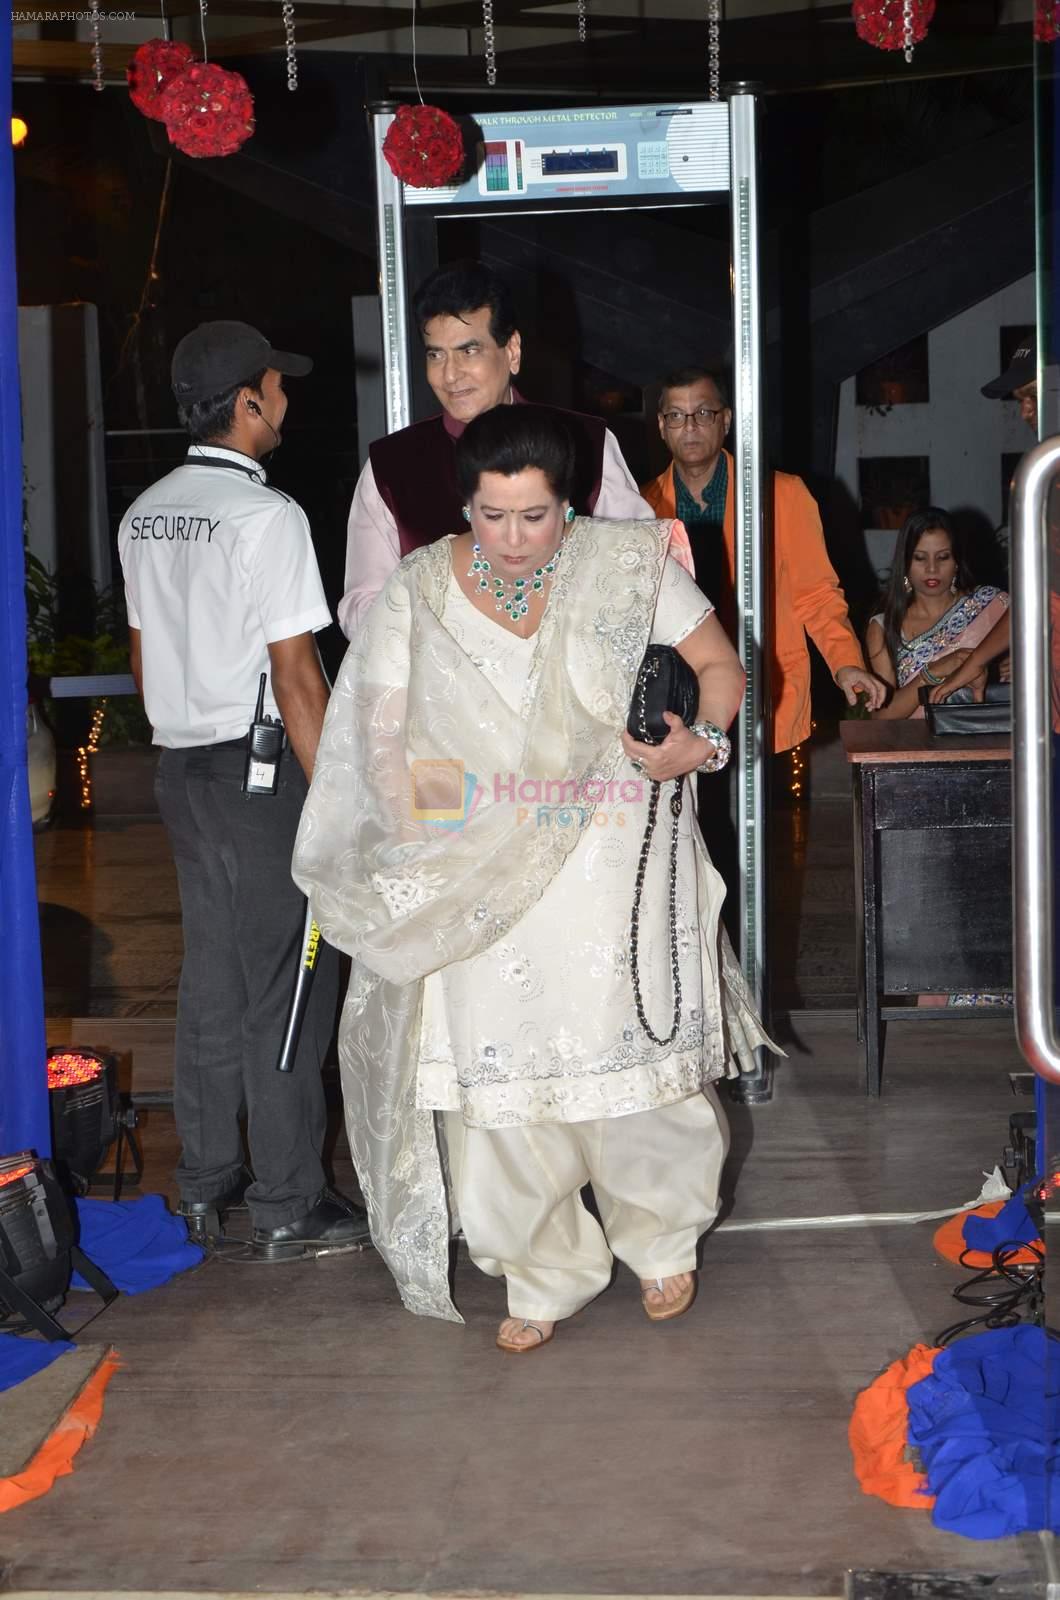 Jeetendra at Karan Patel and Ankita Engagement and Sangeet Celebration in Novotel Hotel, Juhu on 1st May 2015